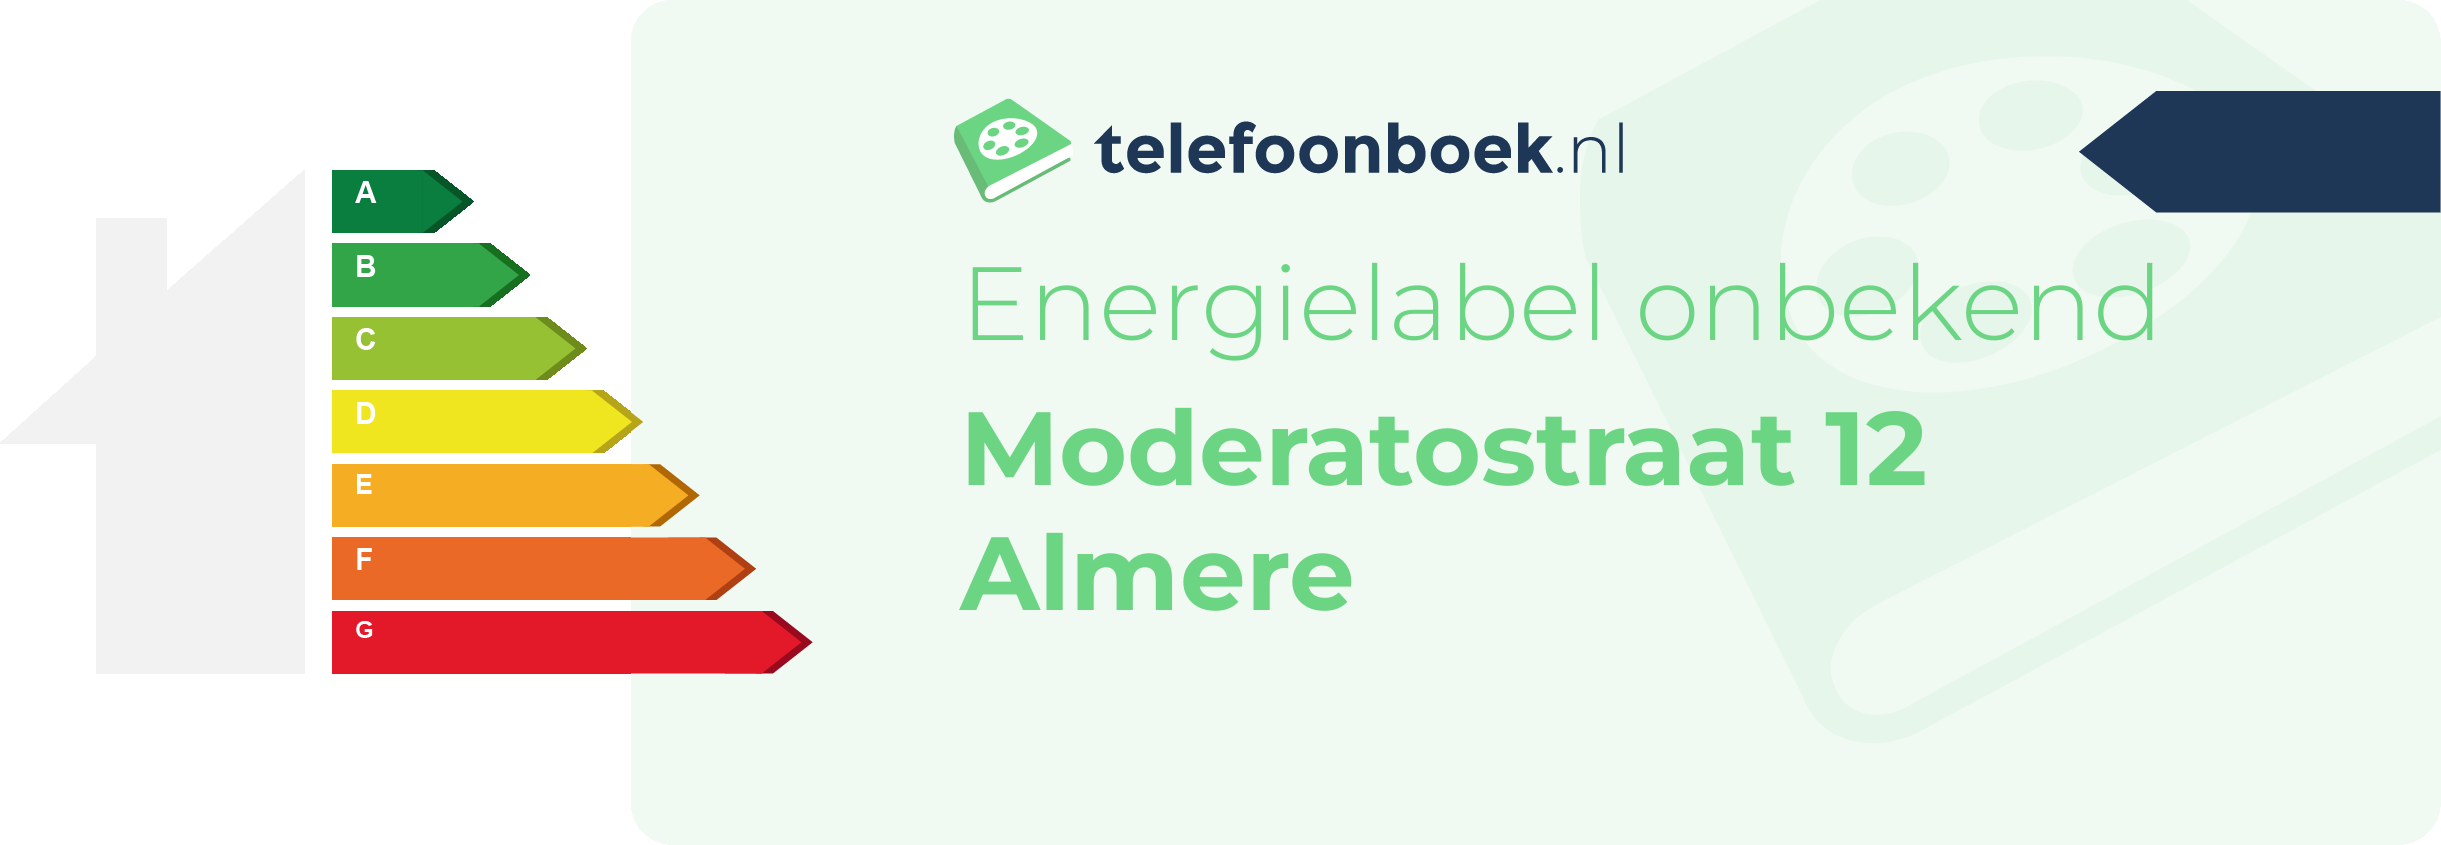 Energielabel Moderatostraat 12 Almere